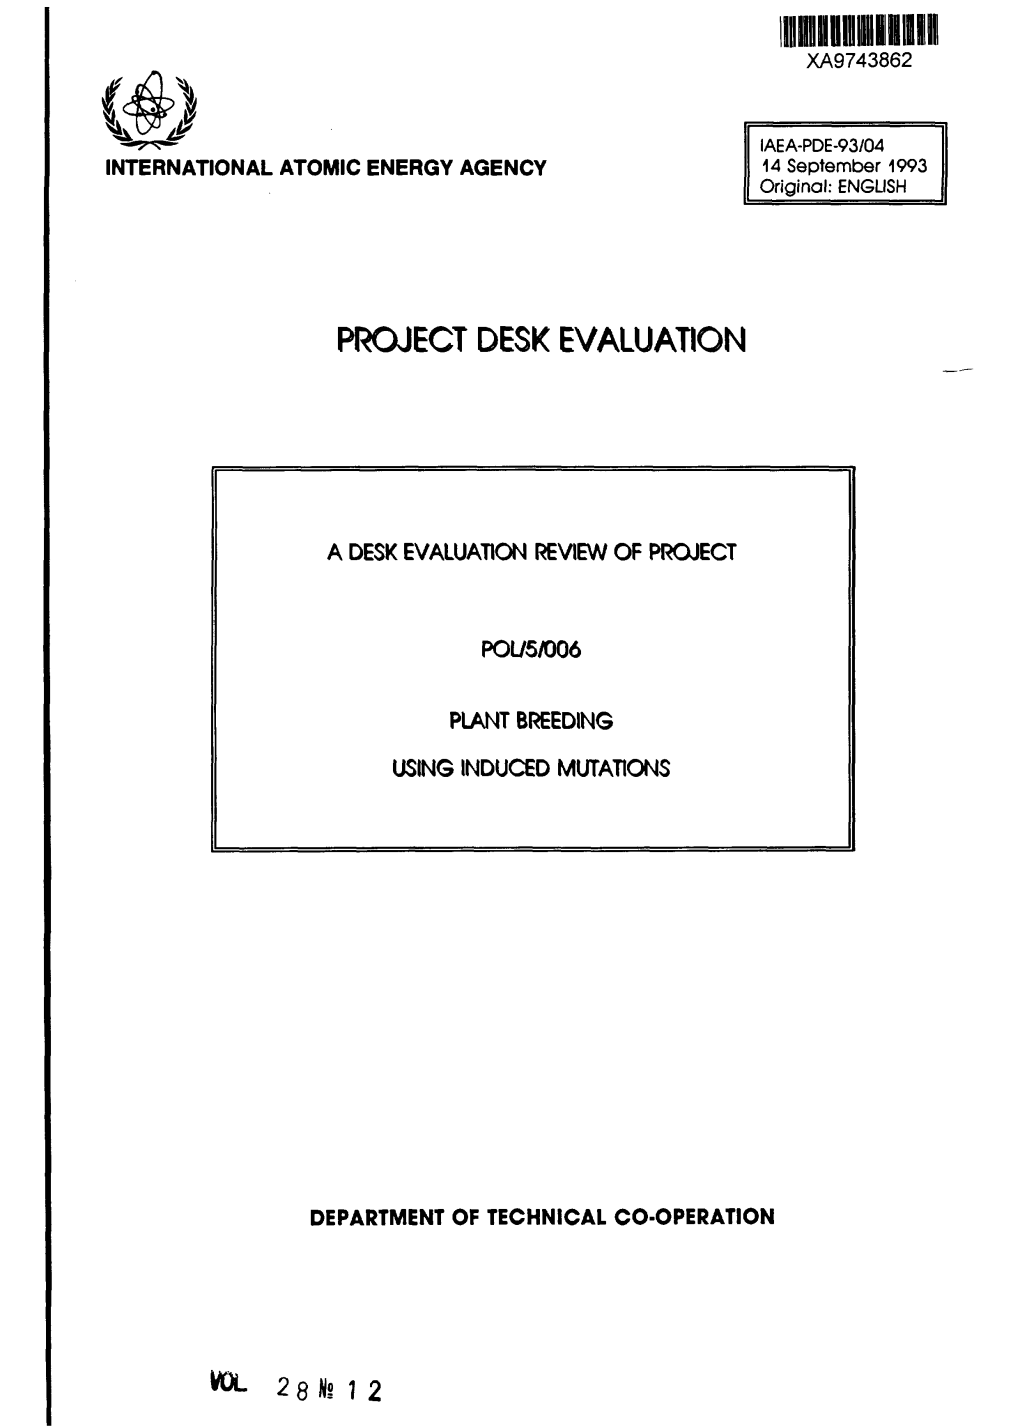 Project Desk Evaluation